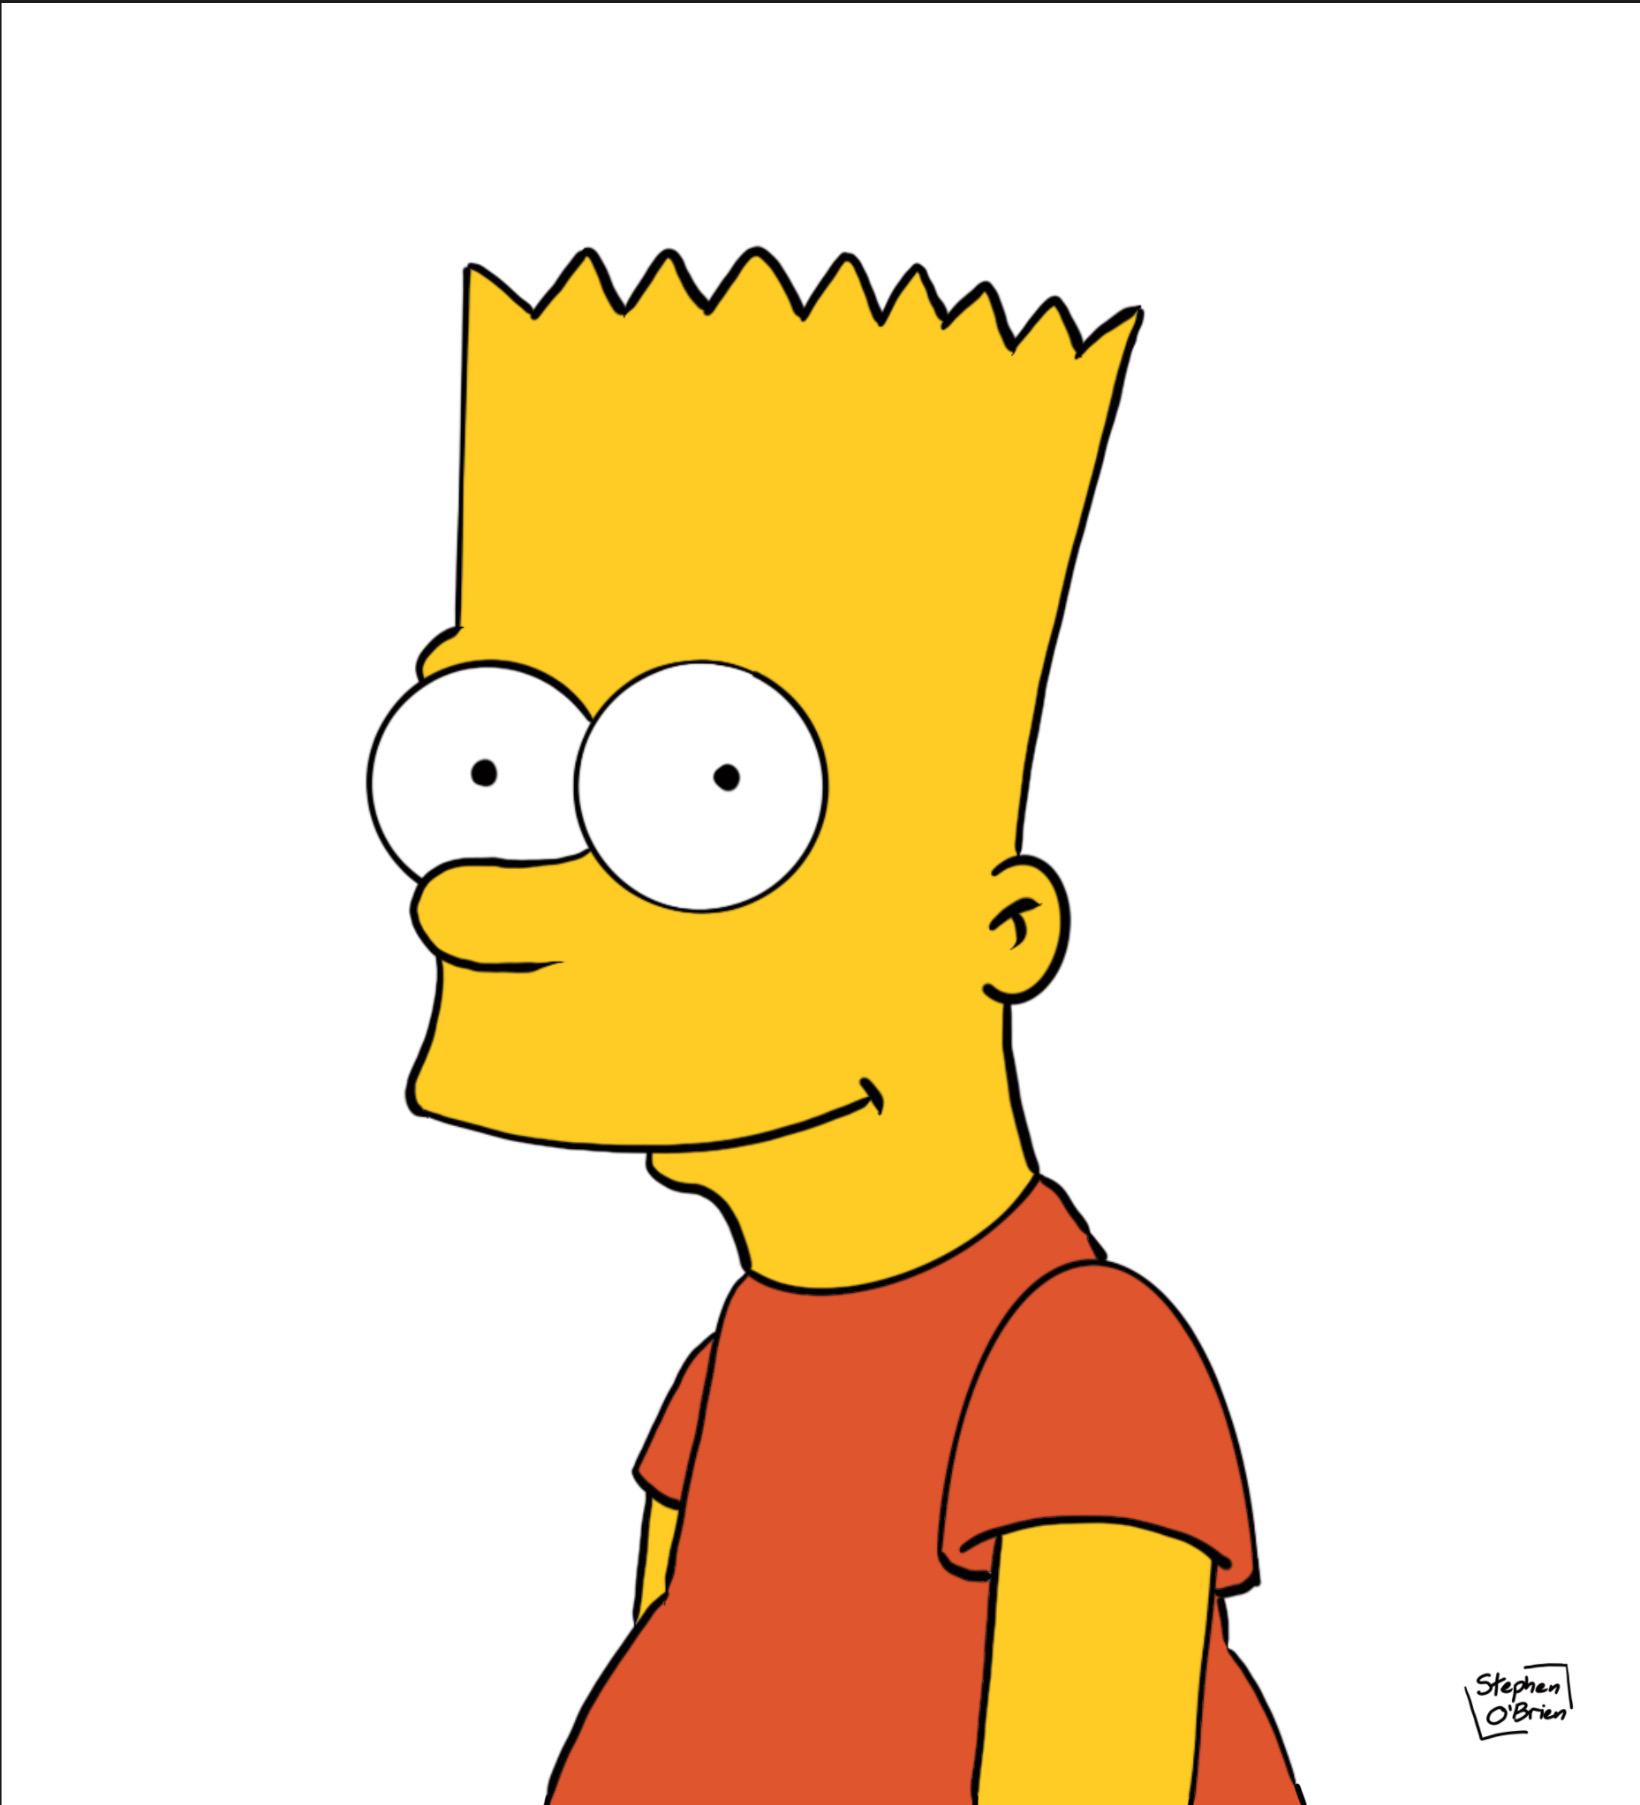 Bartholomew Jojo Bart Simpson (The Simpsons) by BaileyDowns on DeviantArt